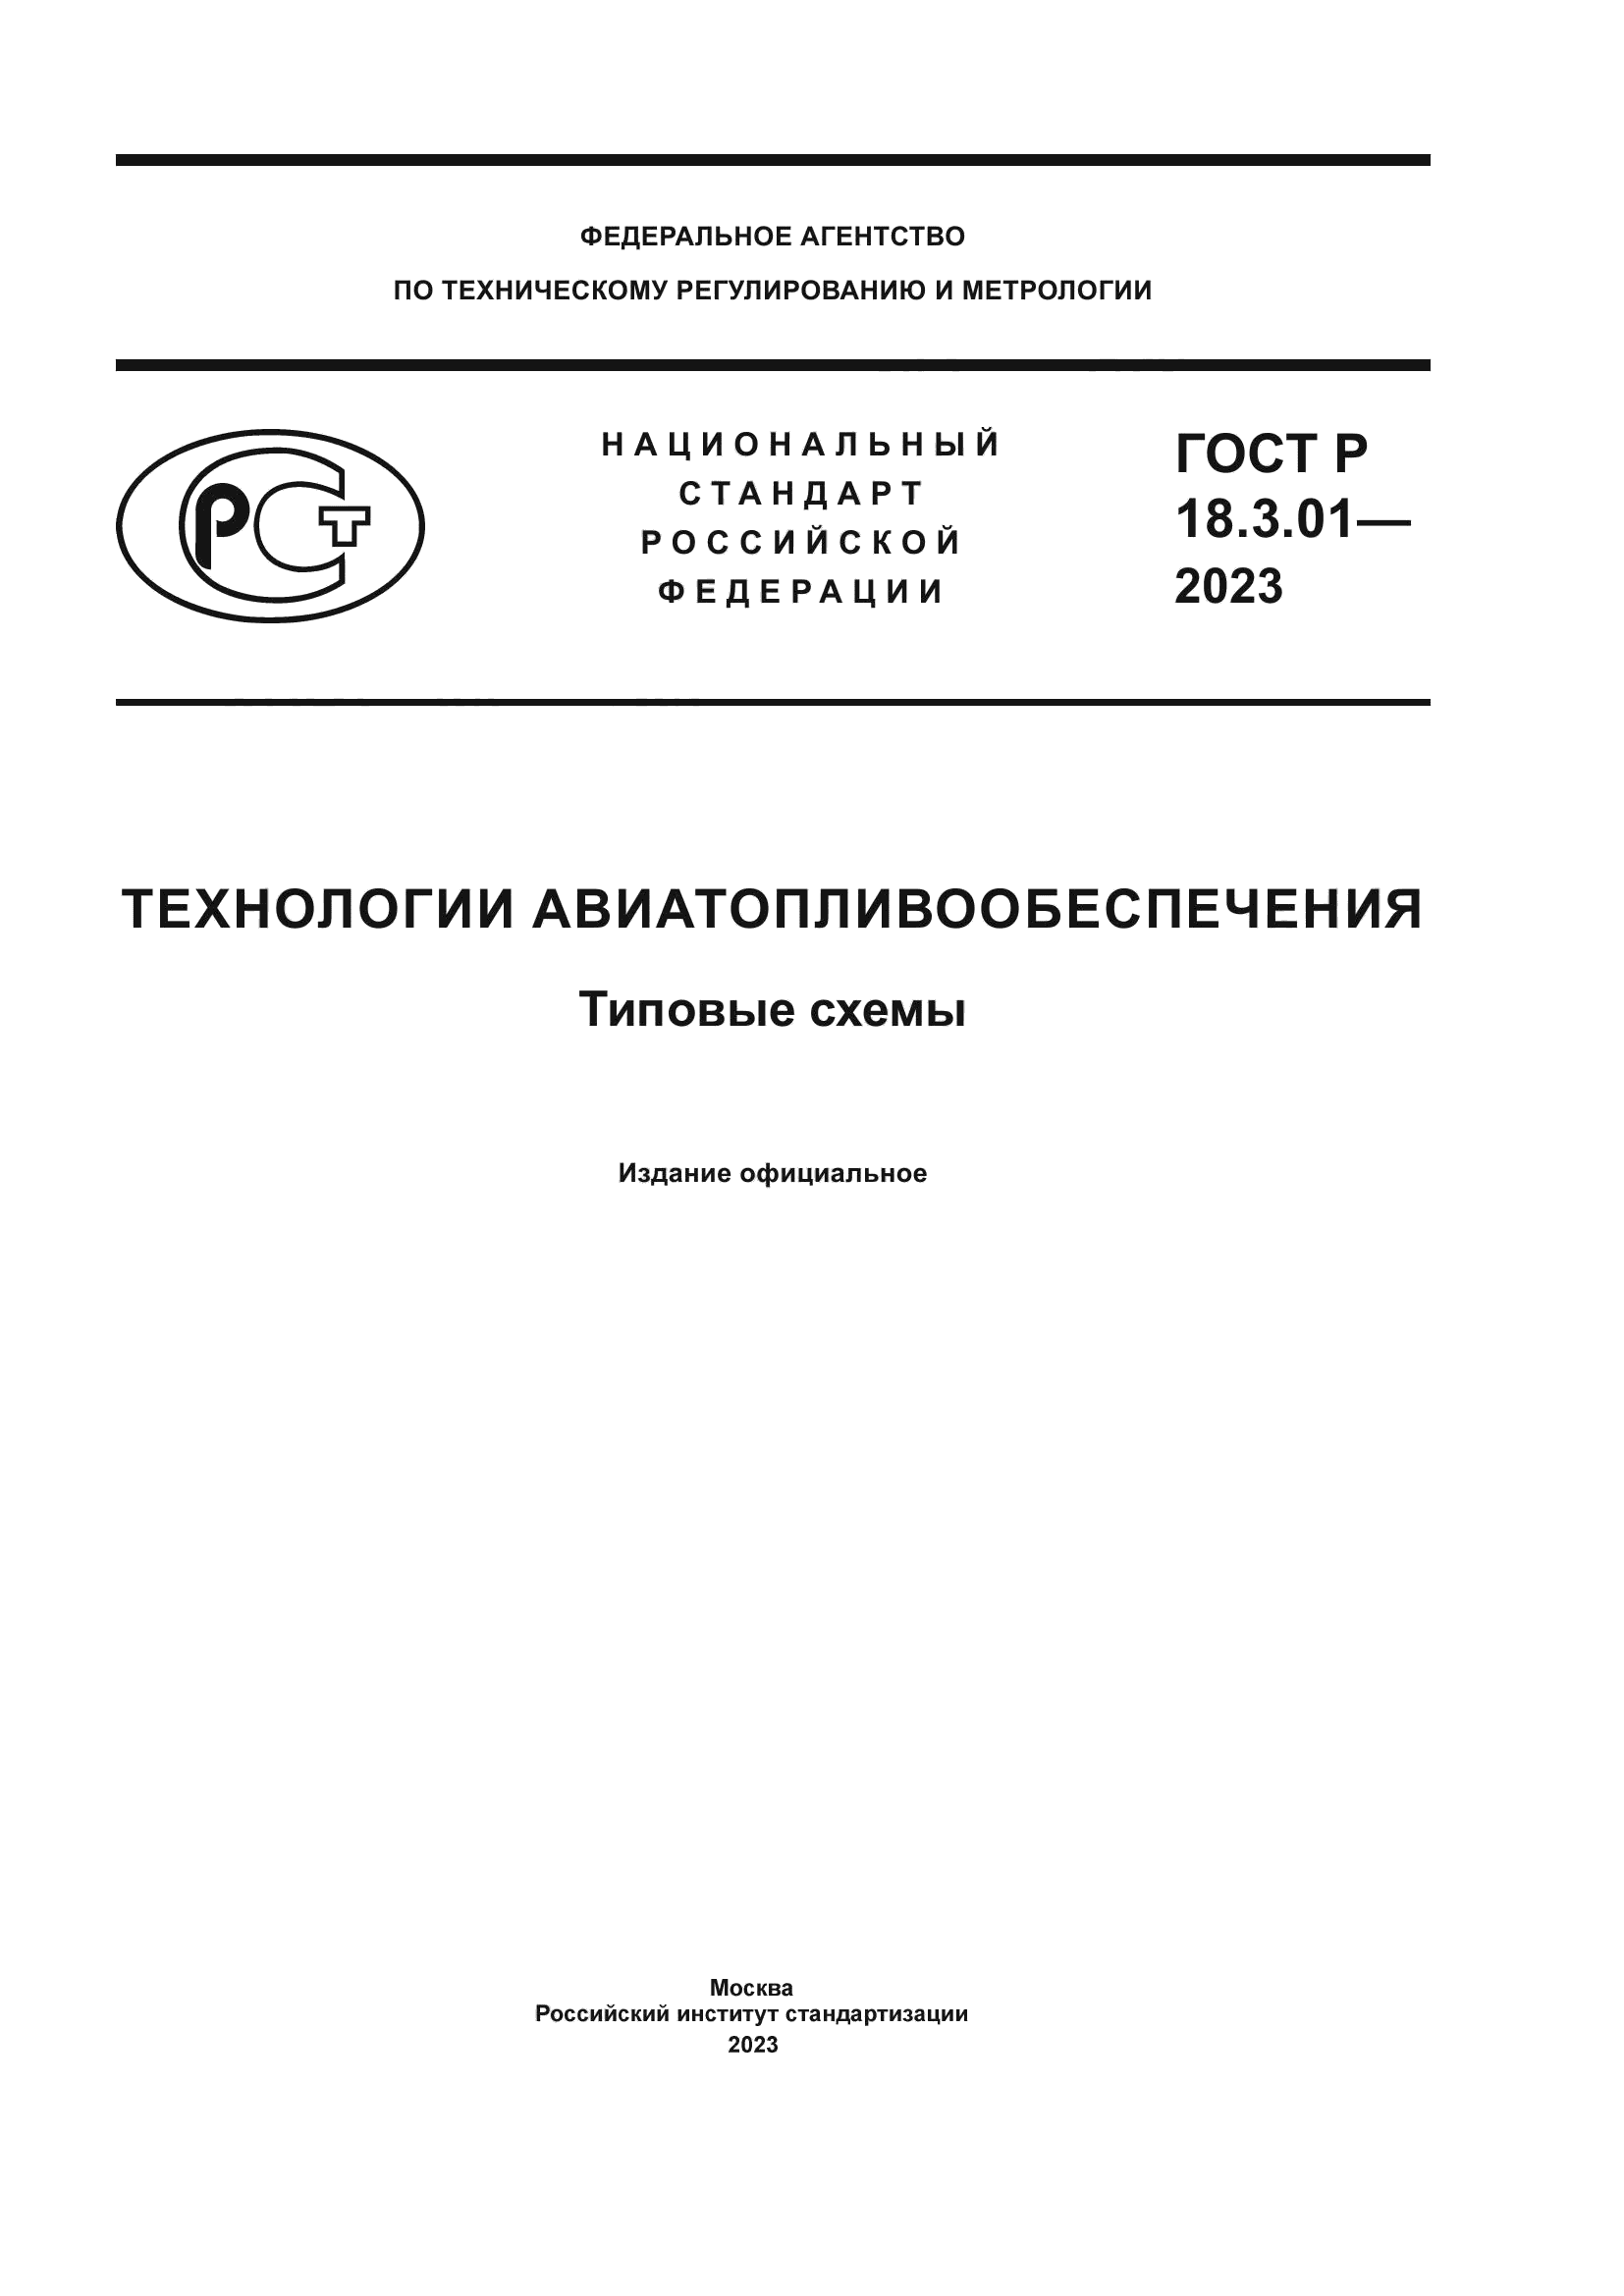 ГОСТ Р 18.3.01-2023